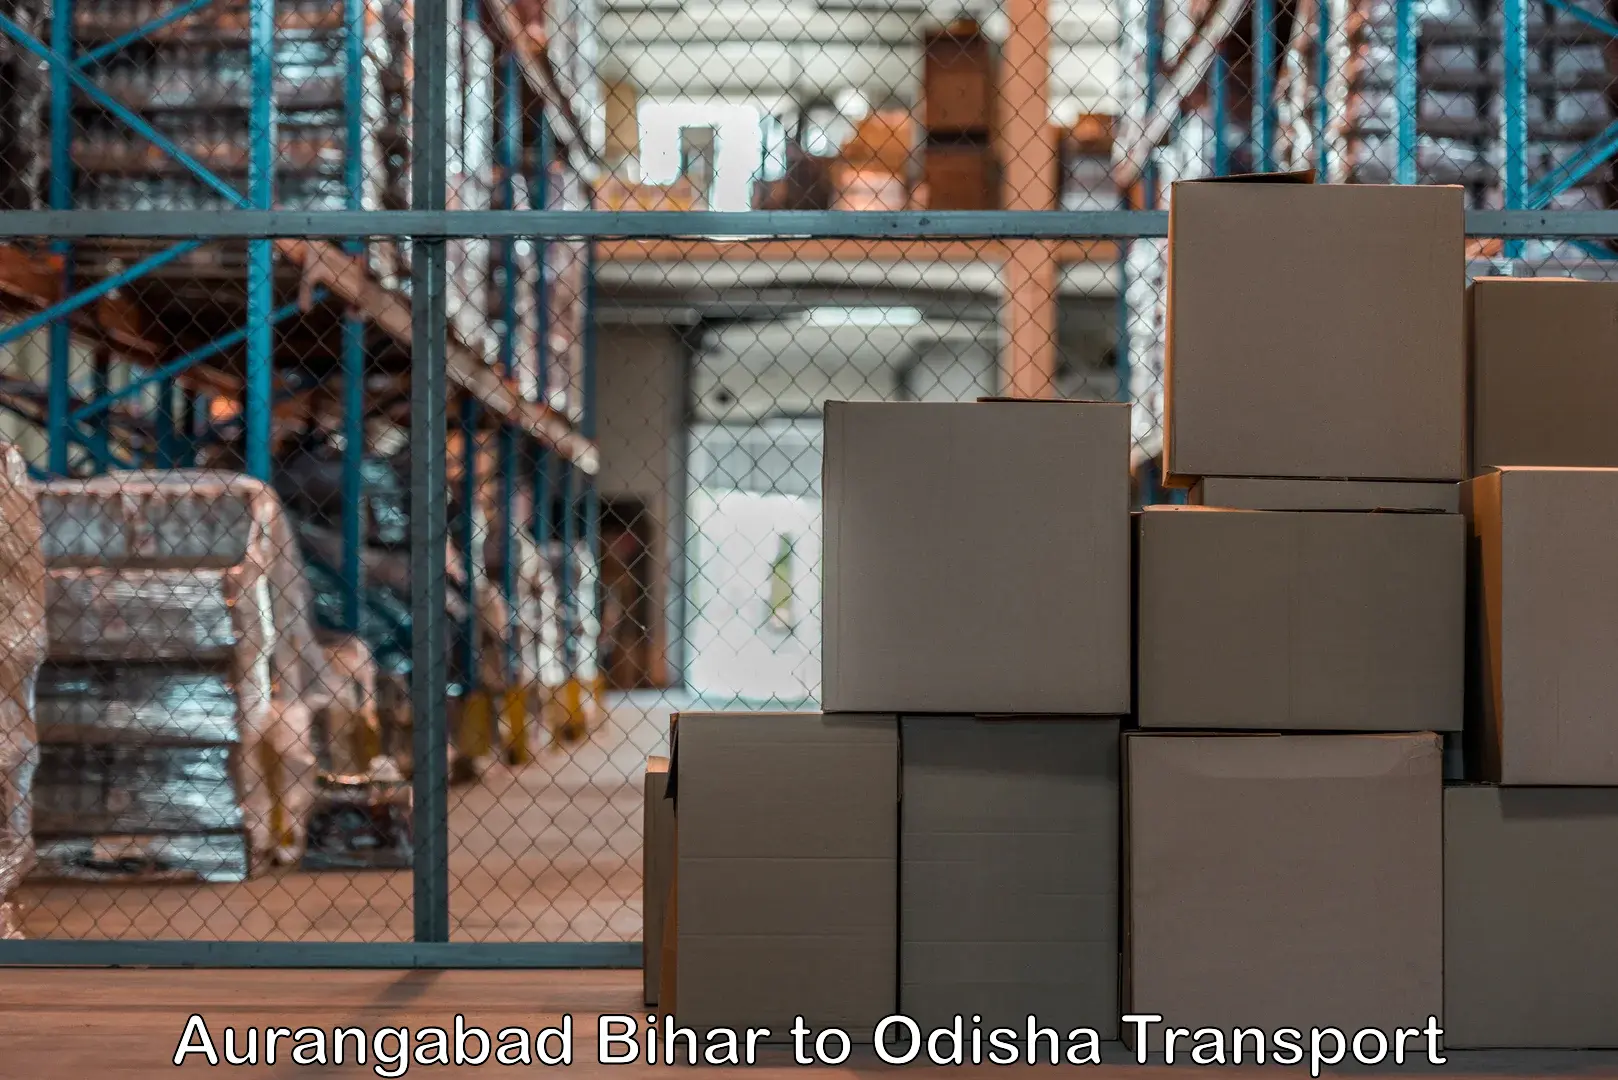 Truck transport companies in India Aurangabad Bihar to Aul